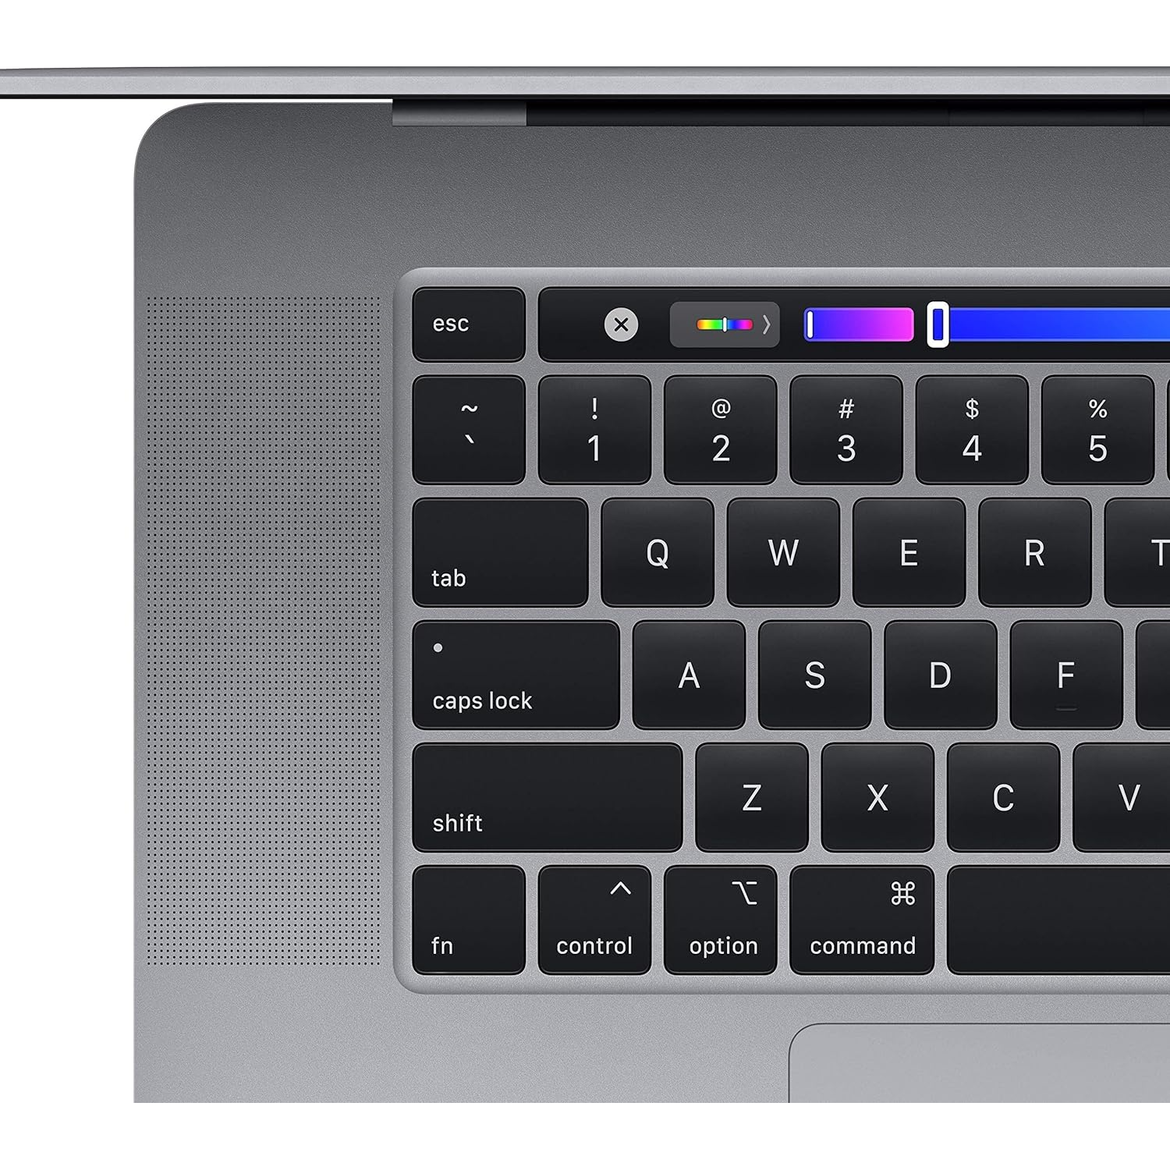 MacBook Pro 16-inch Laptop 2.3GHz i9 8-Core 16GB RAM 1TB SSD (Space Gray)